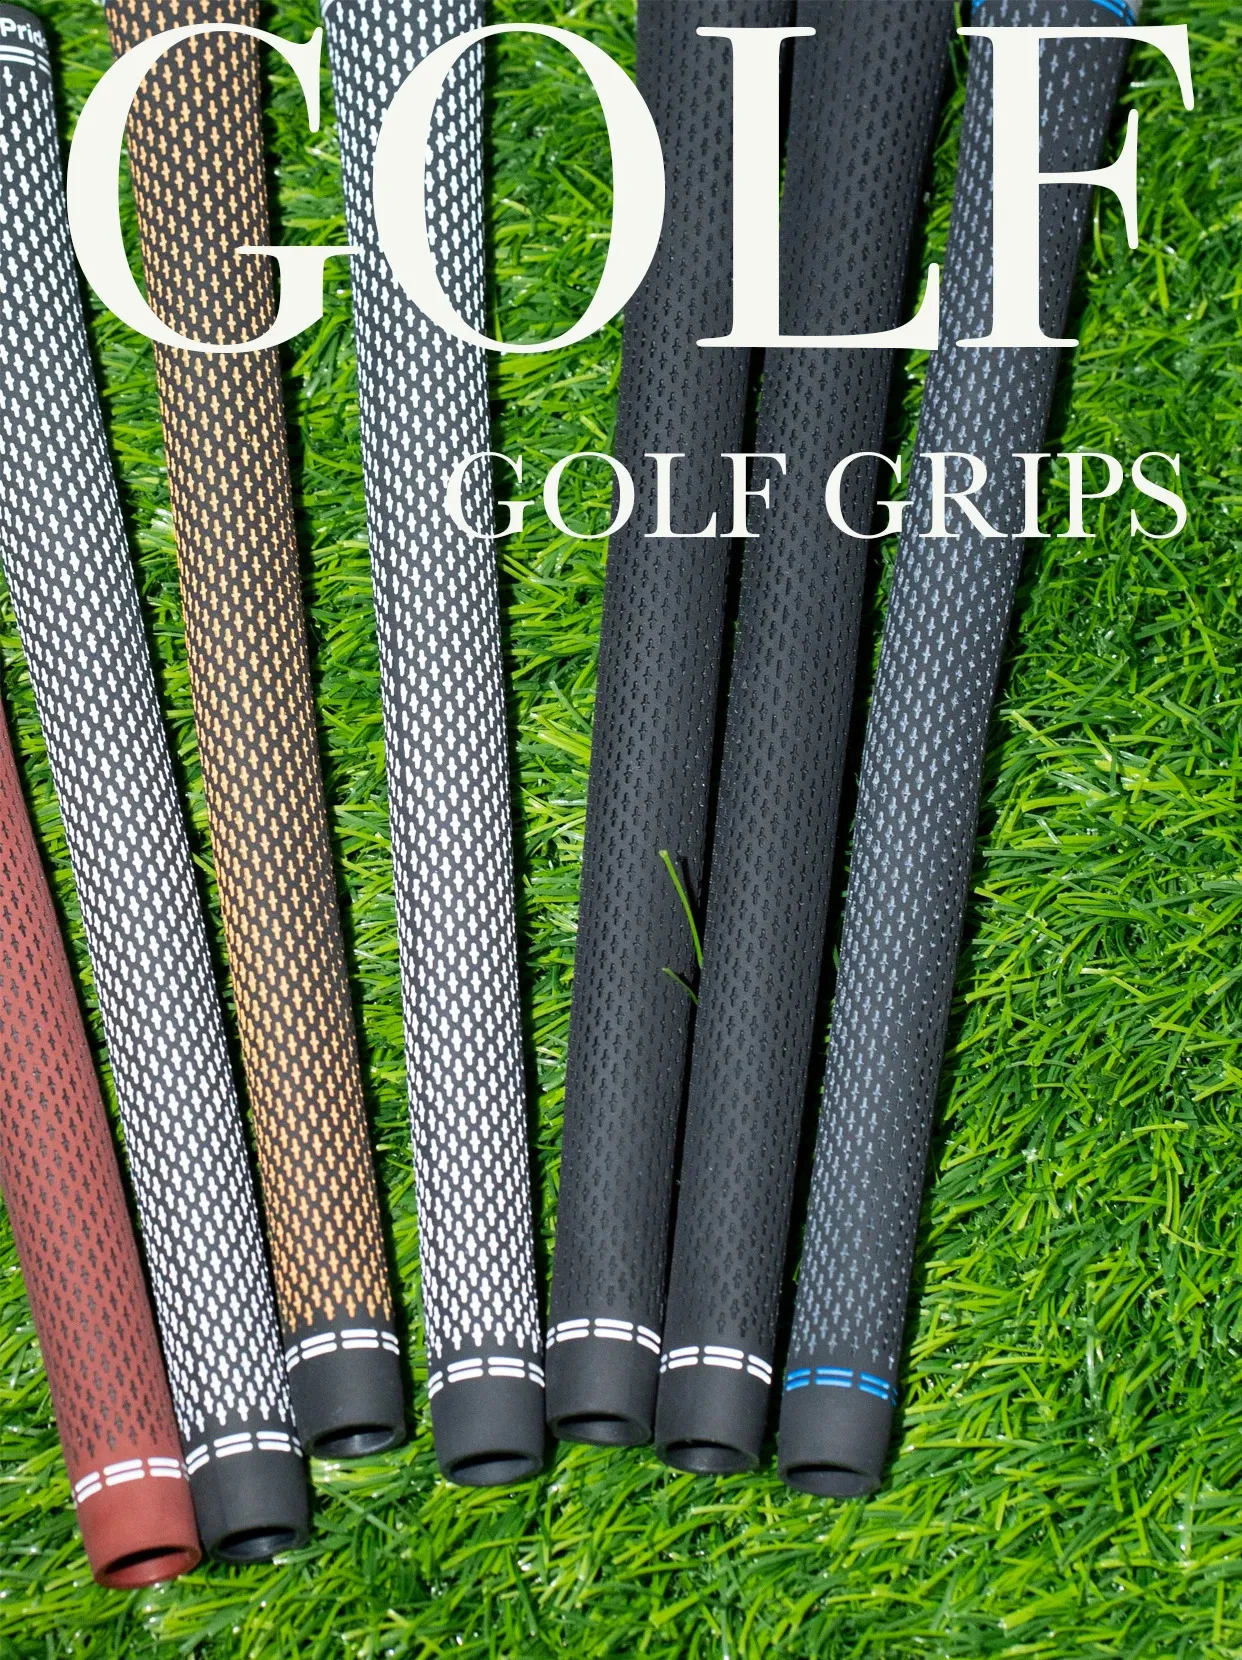 / 360GOLF GRIP GP Rubber Golf Club Grips Sous-dimension / standard / Mid-Size 240323